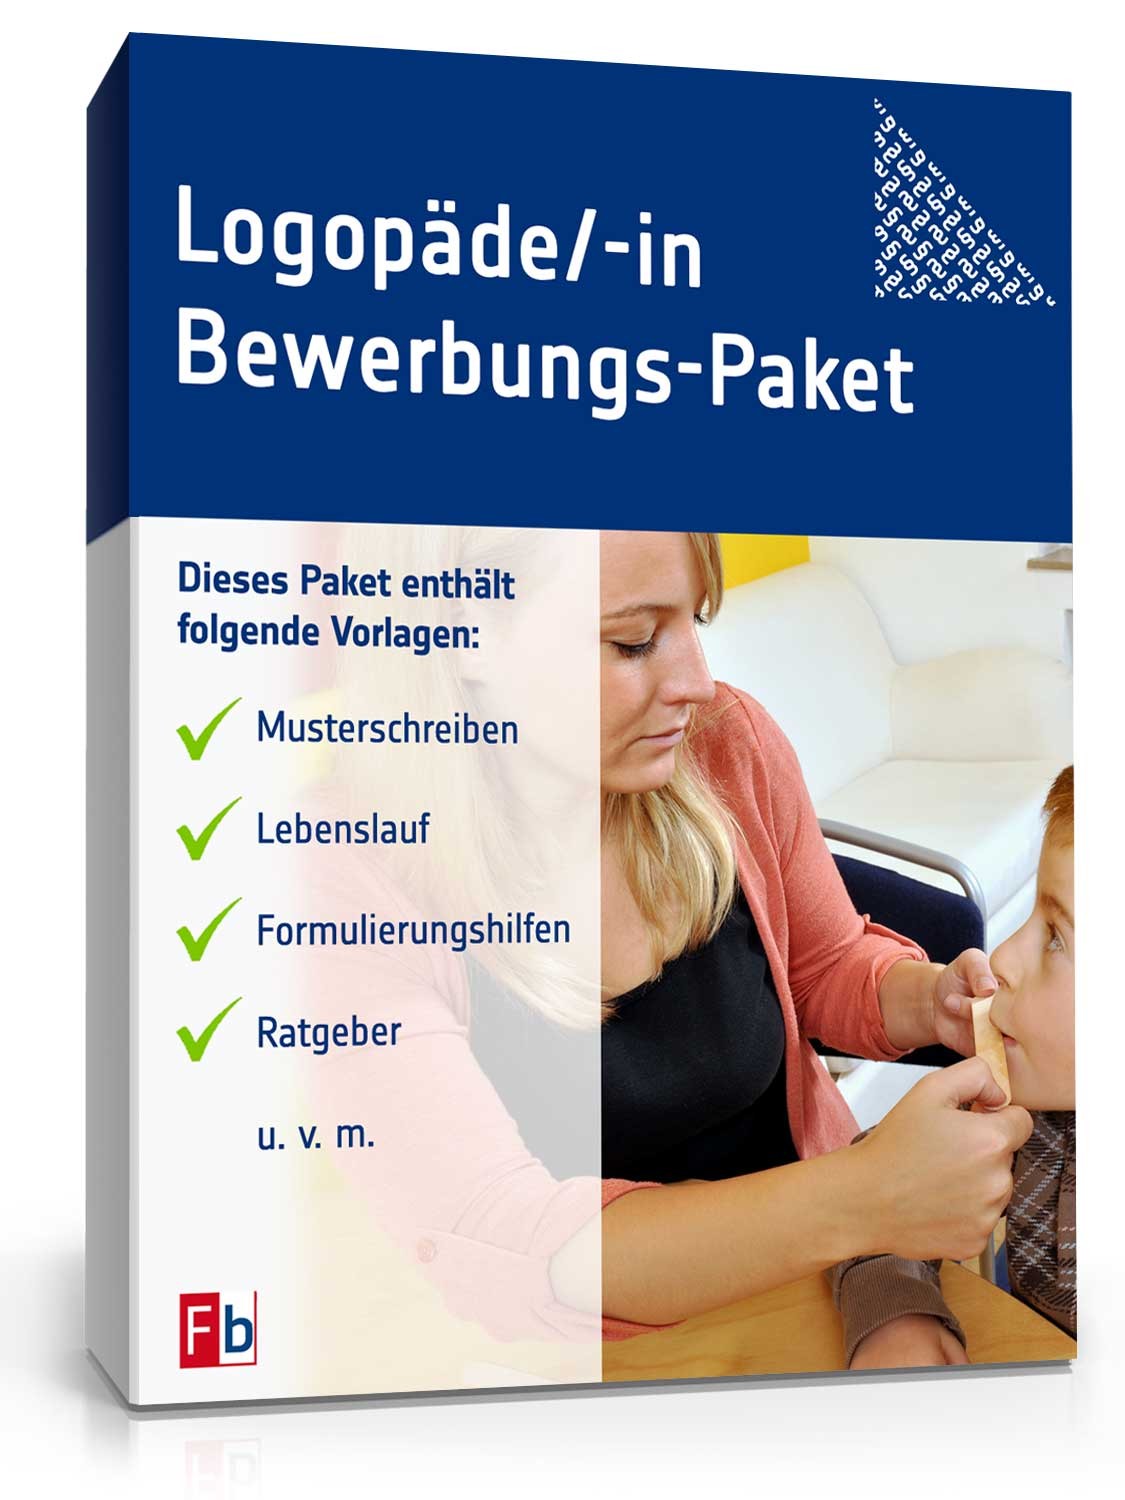 Hauptbild des Produkts: Bewerbungs-Paket Logopädie